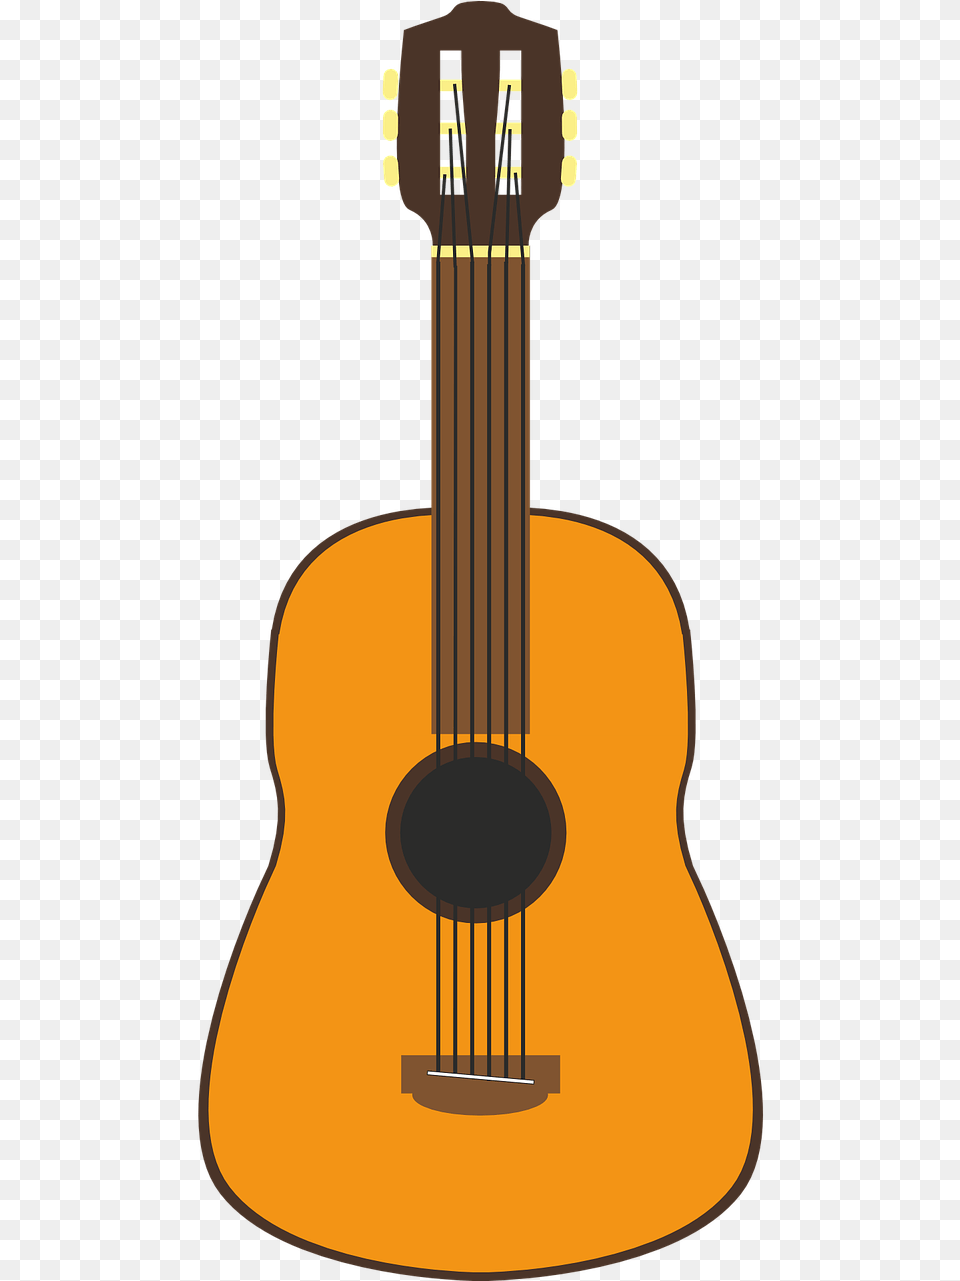 Guitar Vector Music Strings Image Gitar Vektr, Musical Instrument Free Png Download